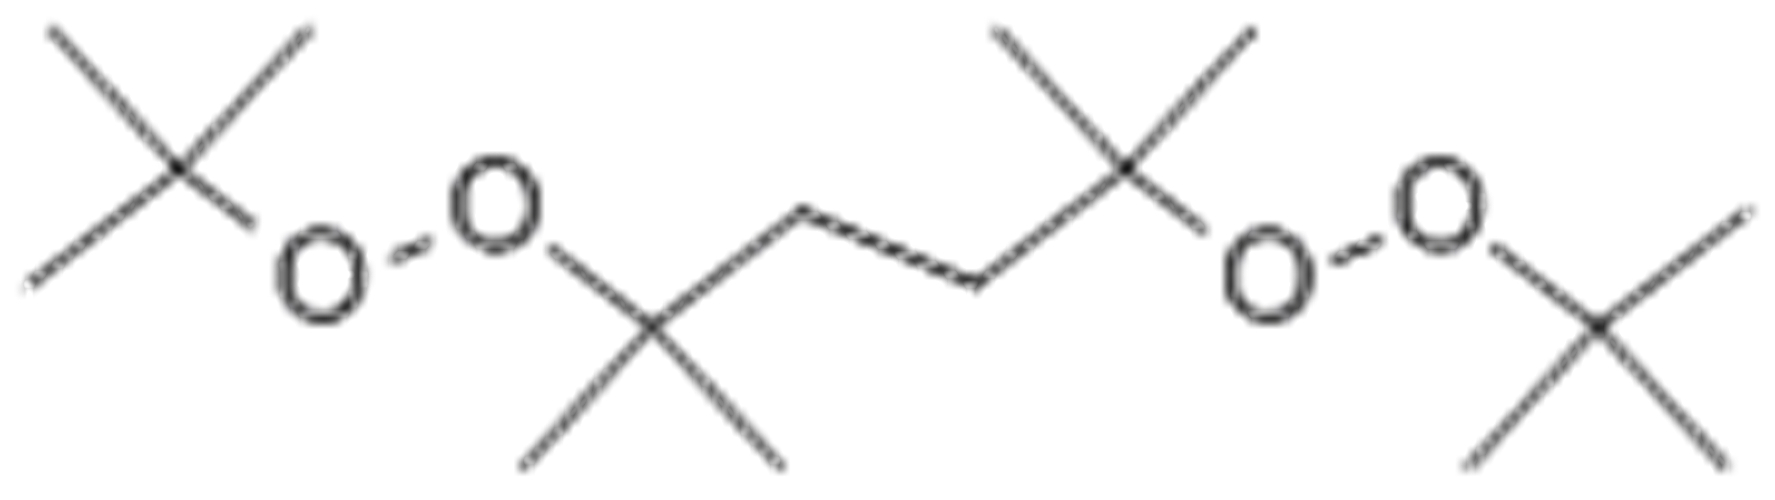 63 78 4. 2,5-Диметил-2,5-ди-(Трет-бутилперокси) гексан утилизация. Фосфат хиральный ди(Терт-бутил). Картинки на игру hexane. 2,4-Ди-Терт-бутил-6-(5-хлоробензотриазол-2-ил)фенол.